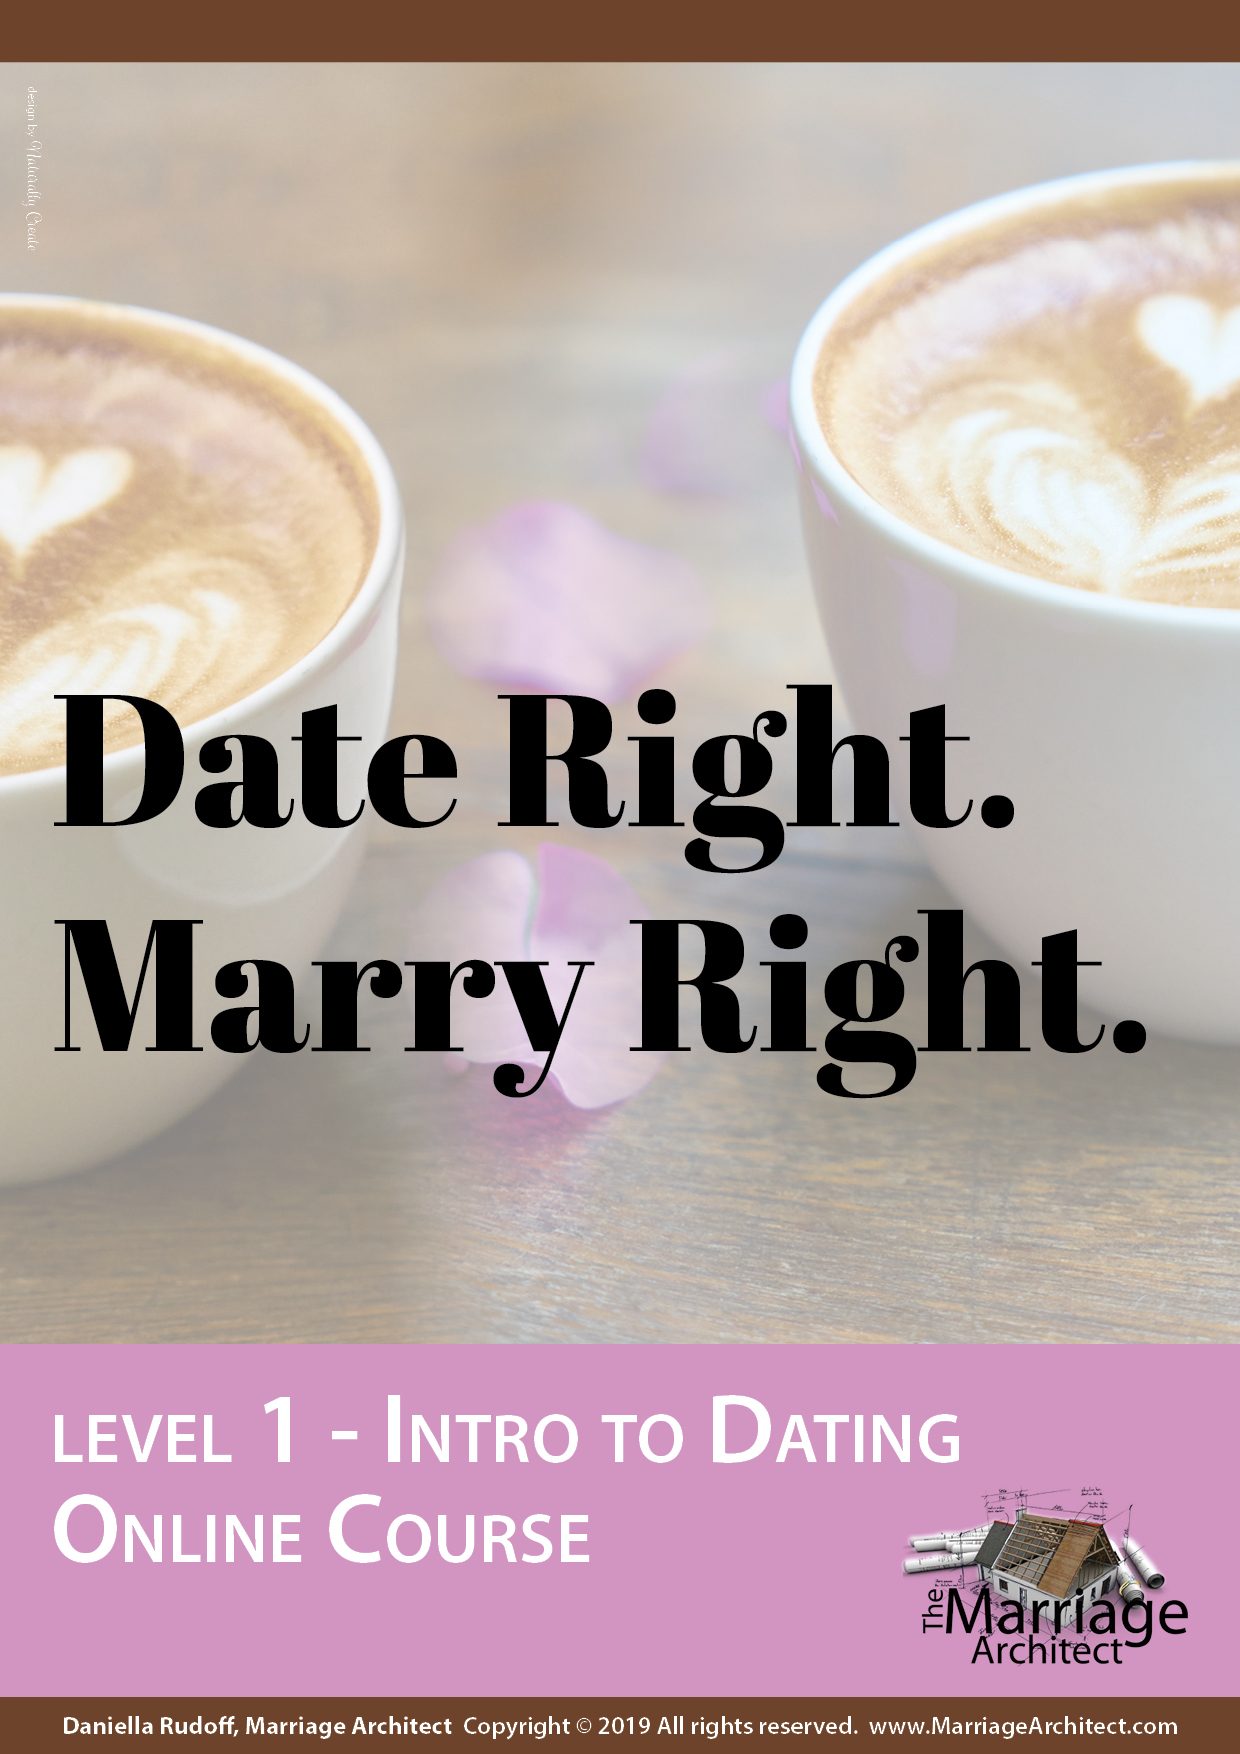 Dating Smarter Series – 2 part series